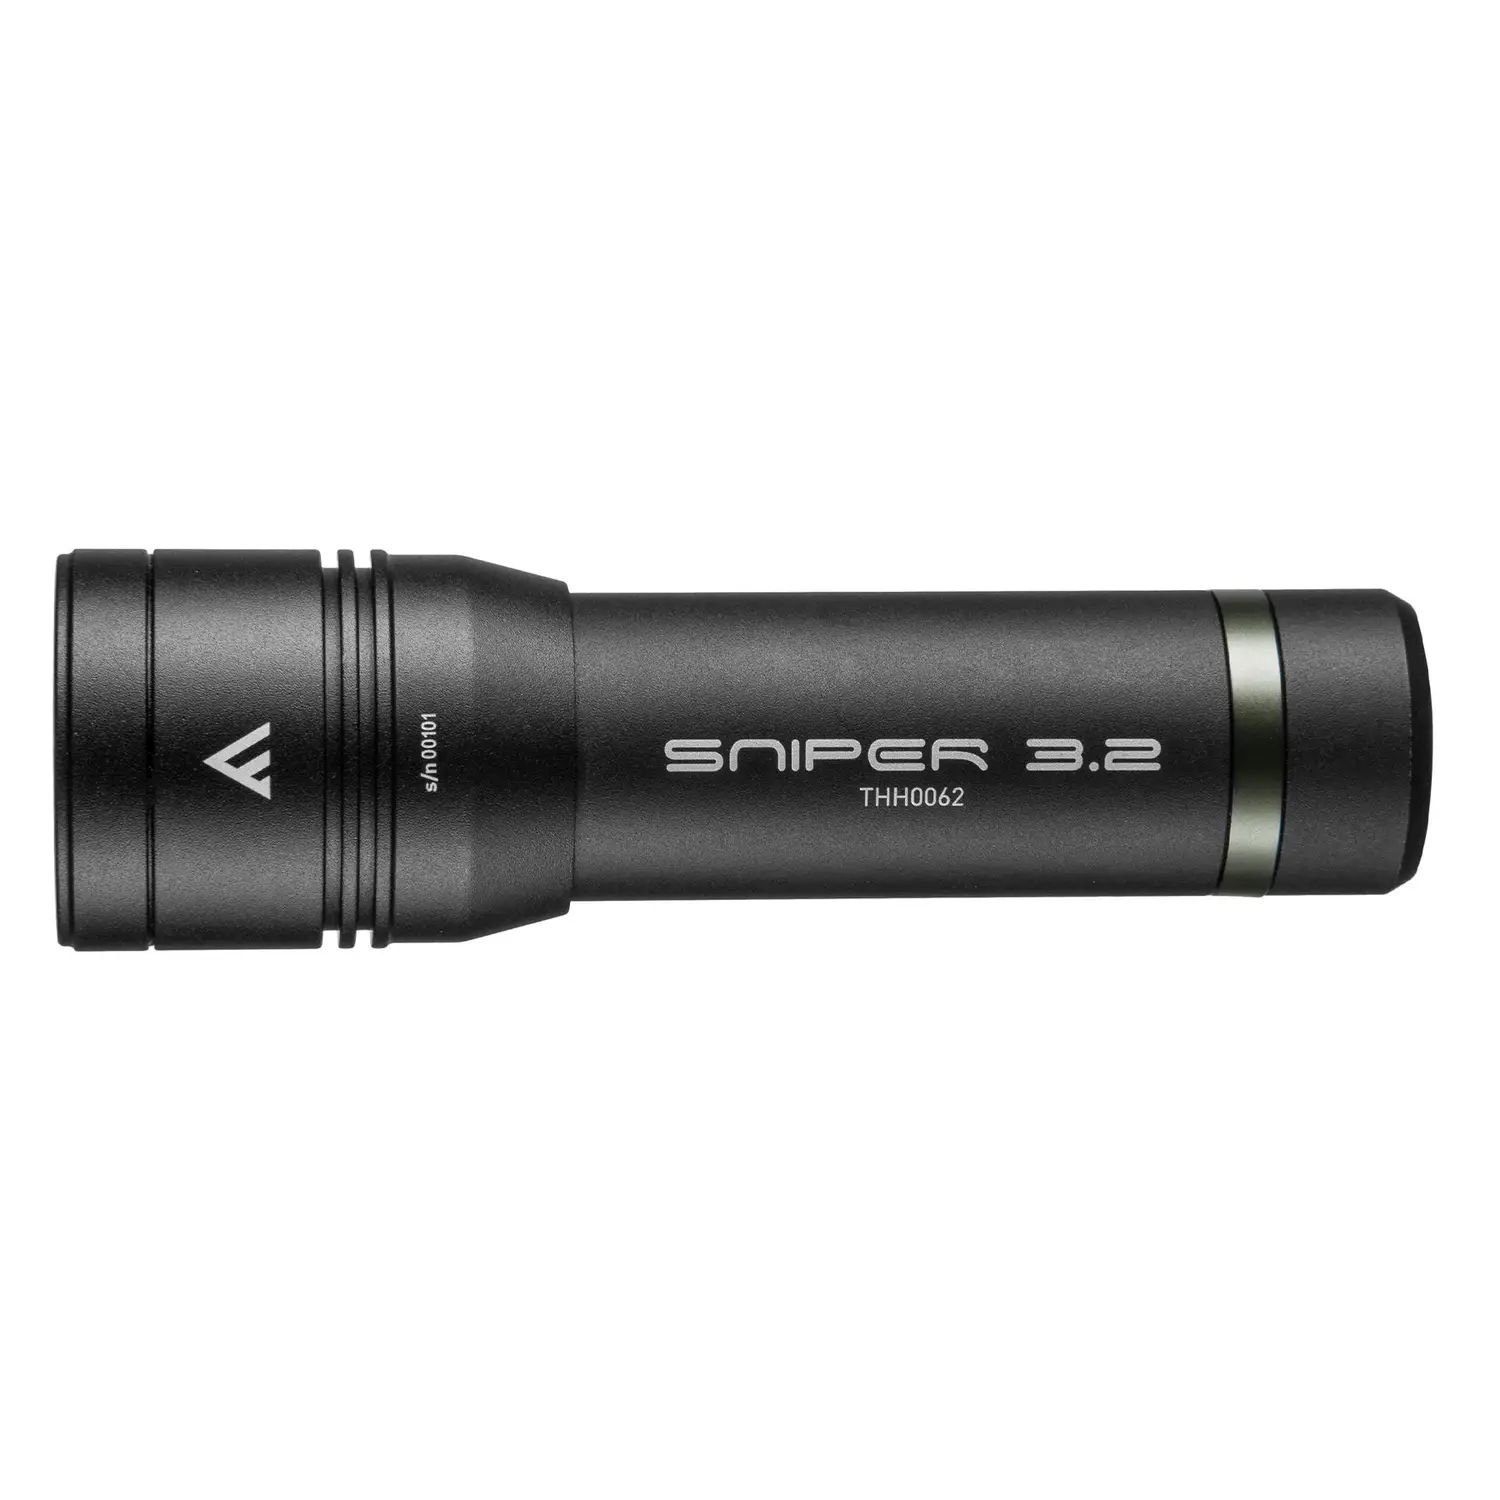 Ліхтар тактичний Mactronic Sniper 3.2, 420 Lm Silent Switch (THH0062) - фото 2